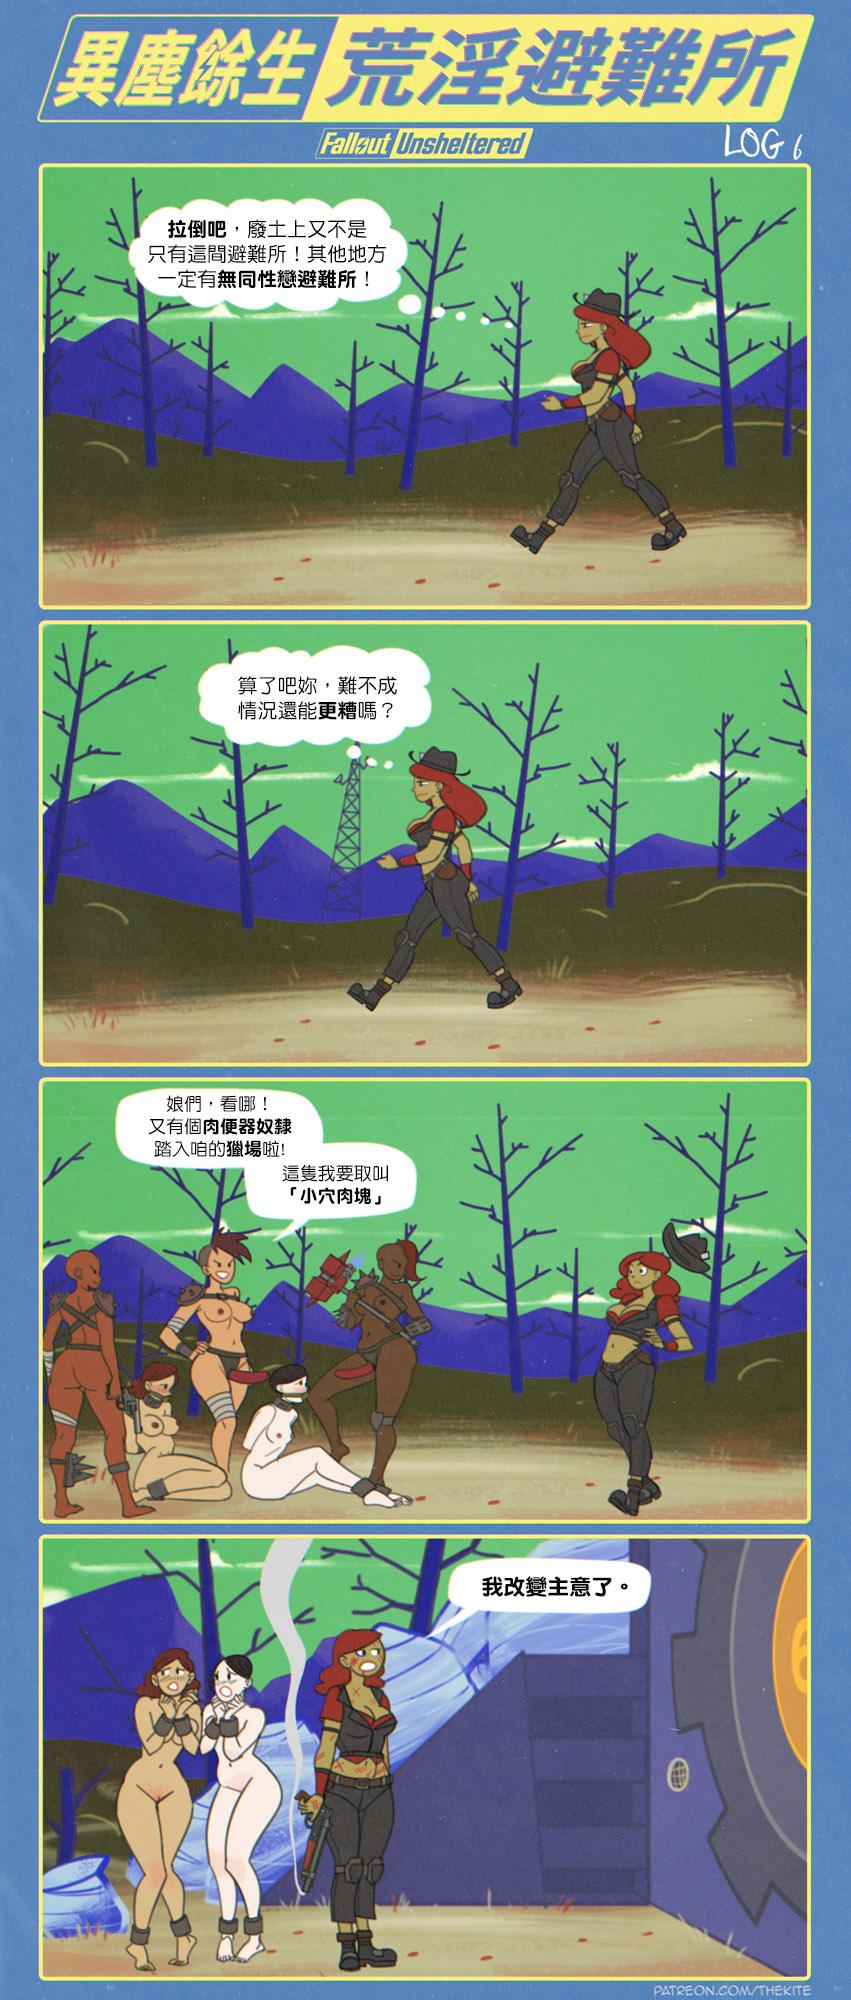 Stretch 異塵餘生 荒淫避難所 - Fallout Masturbando - Page 7